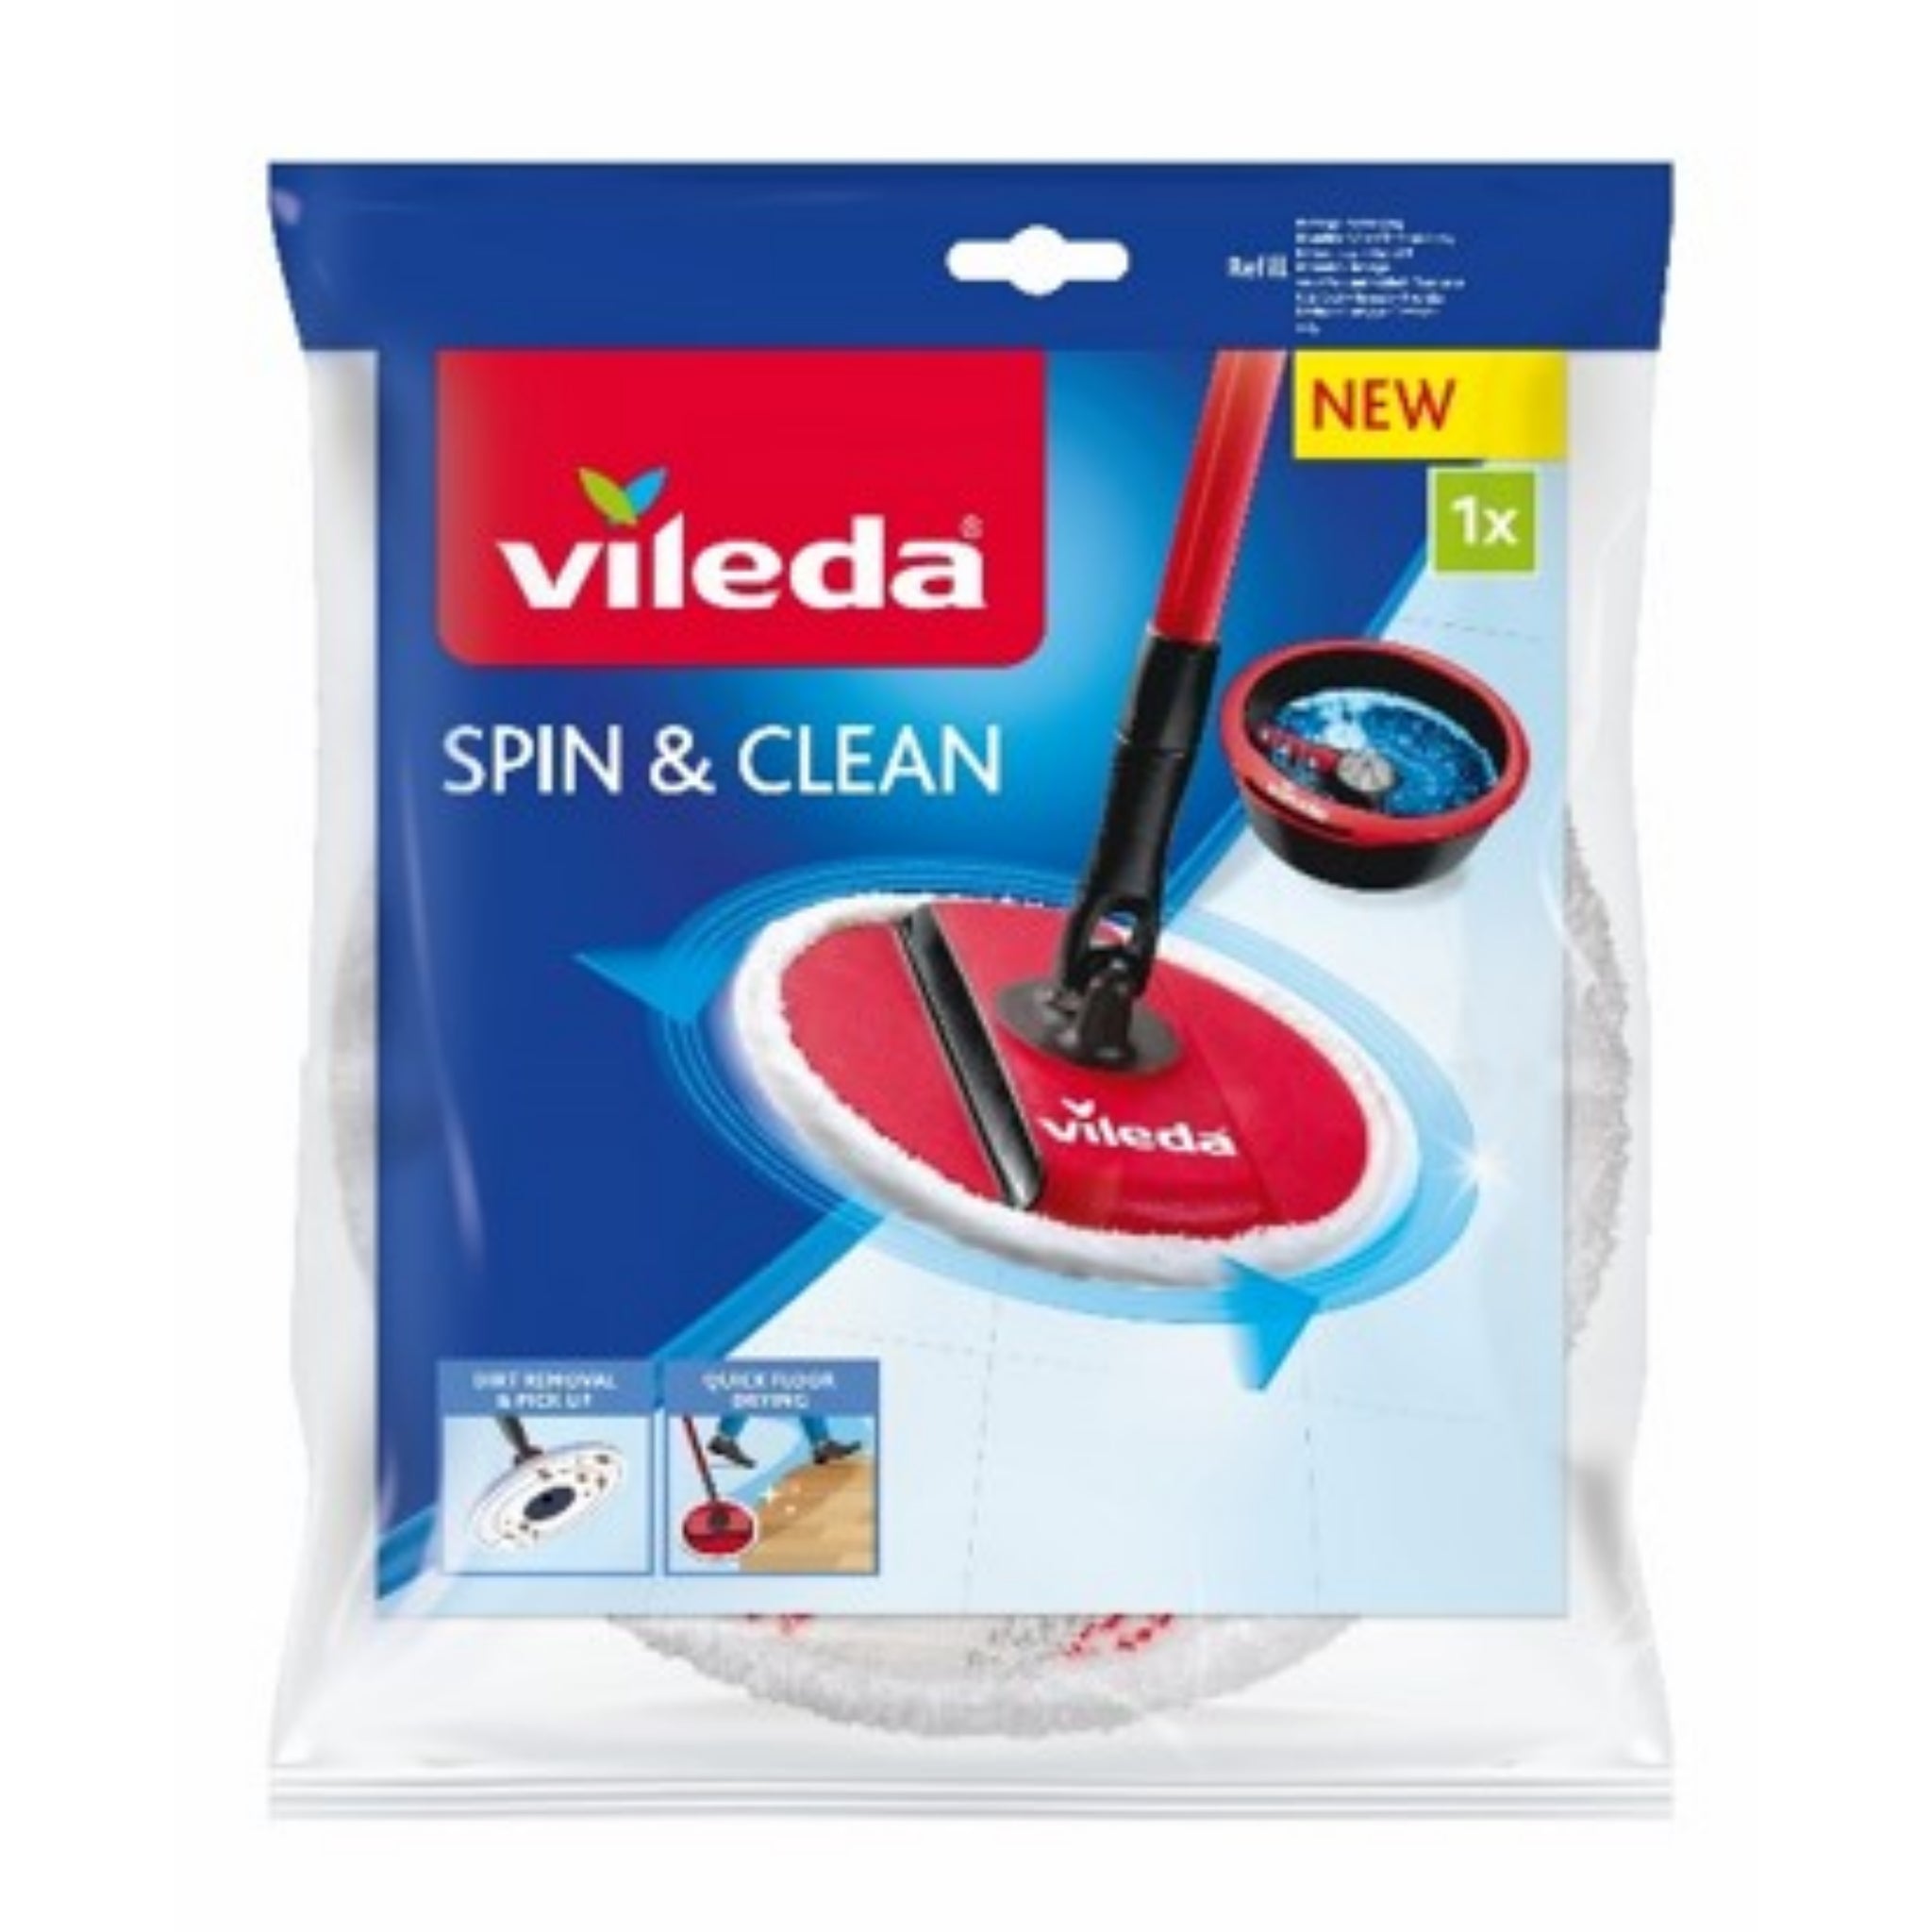 Vileda Spin & Clean Mop Refill